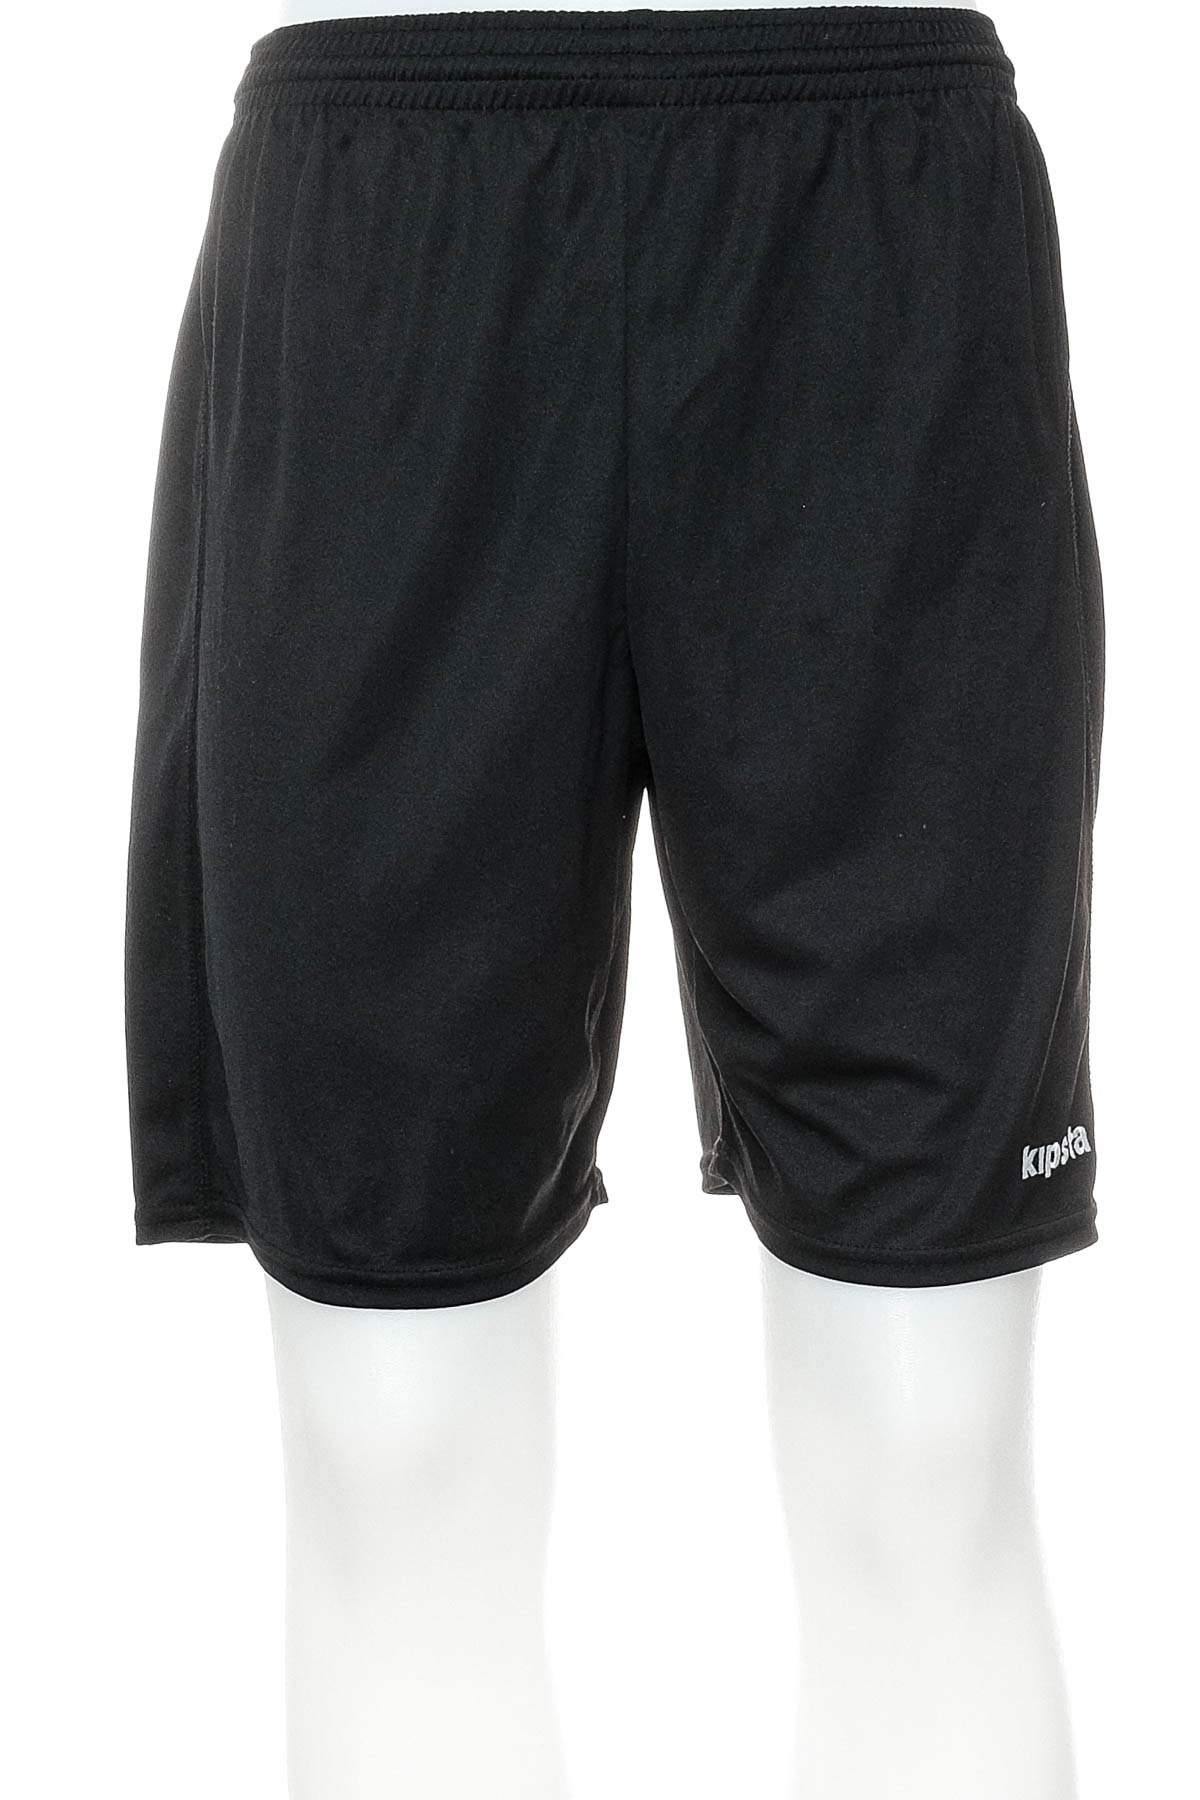 Men's shorts - Kipsta - 0